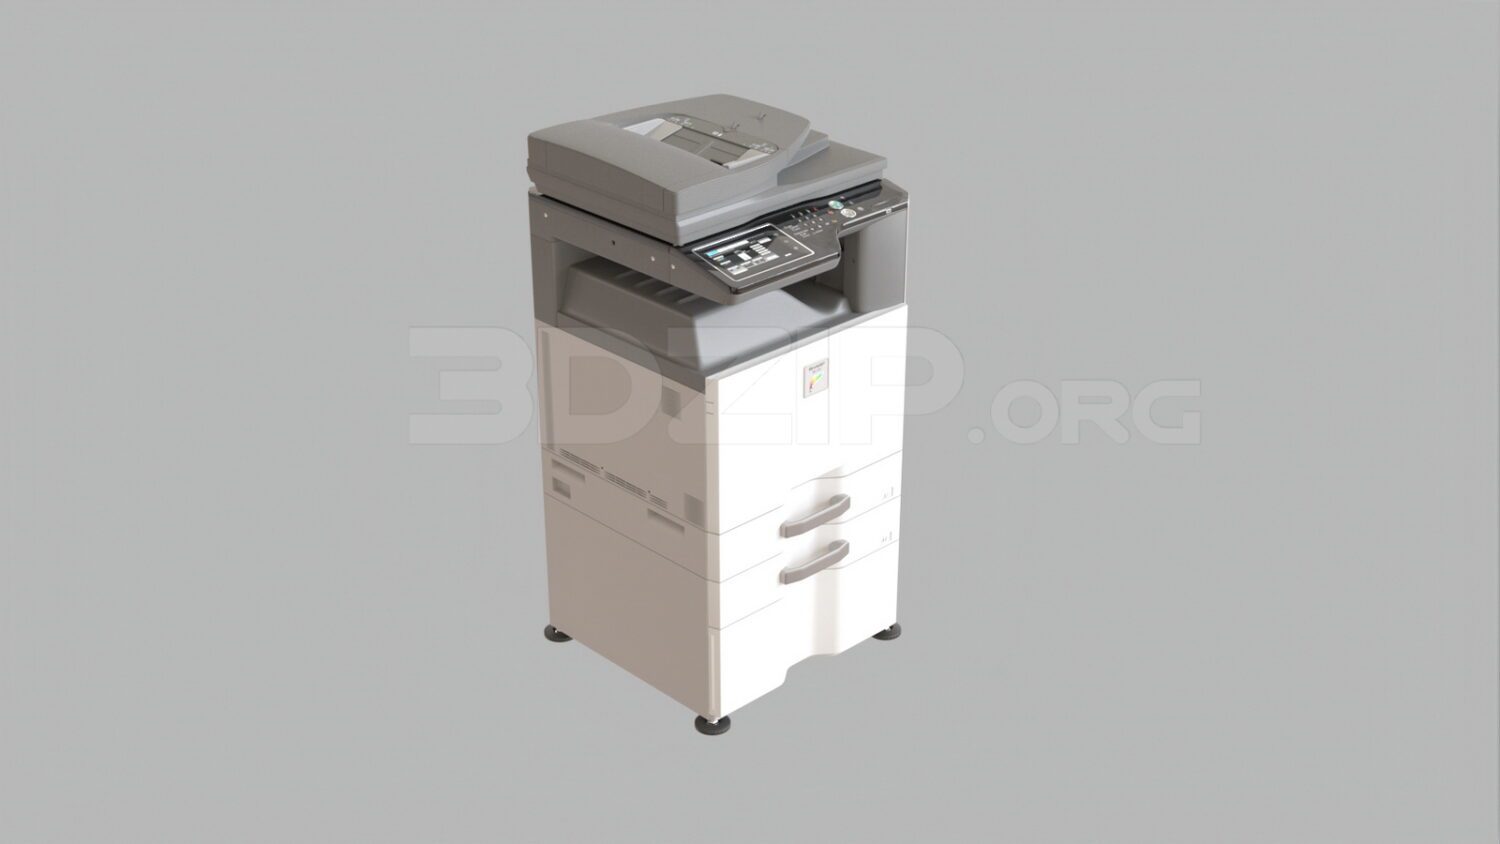 4256. Free 3D Printer Model Download